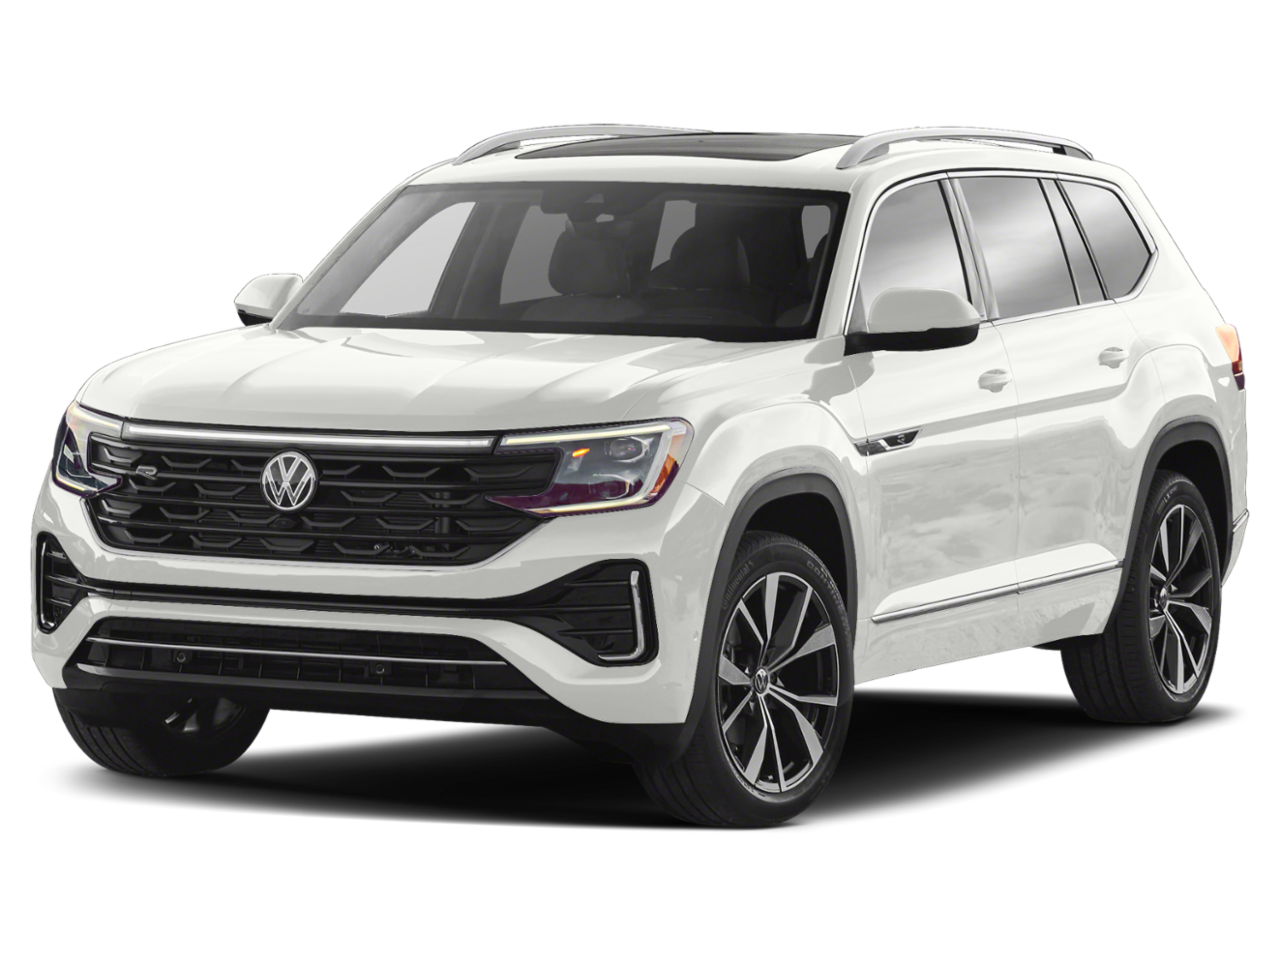 New Volkswagen Atlas vehicles for sale at Everett VW of Rogers AR